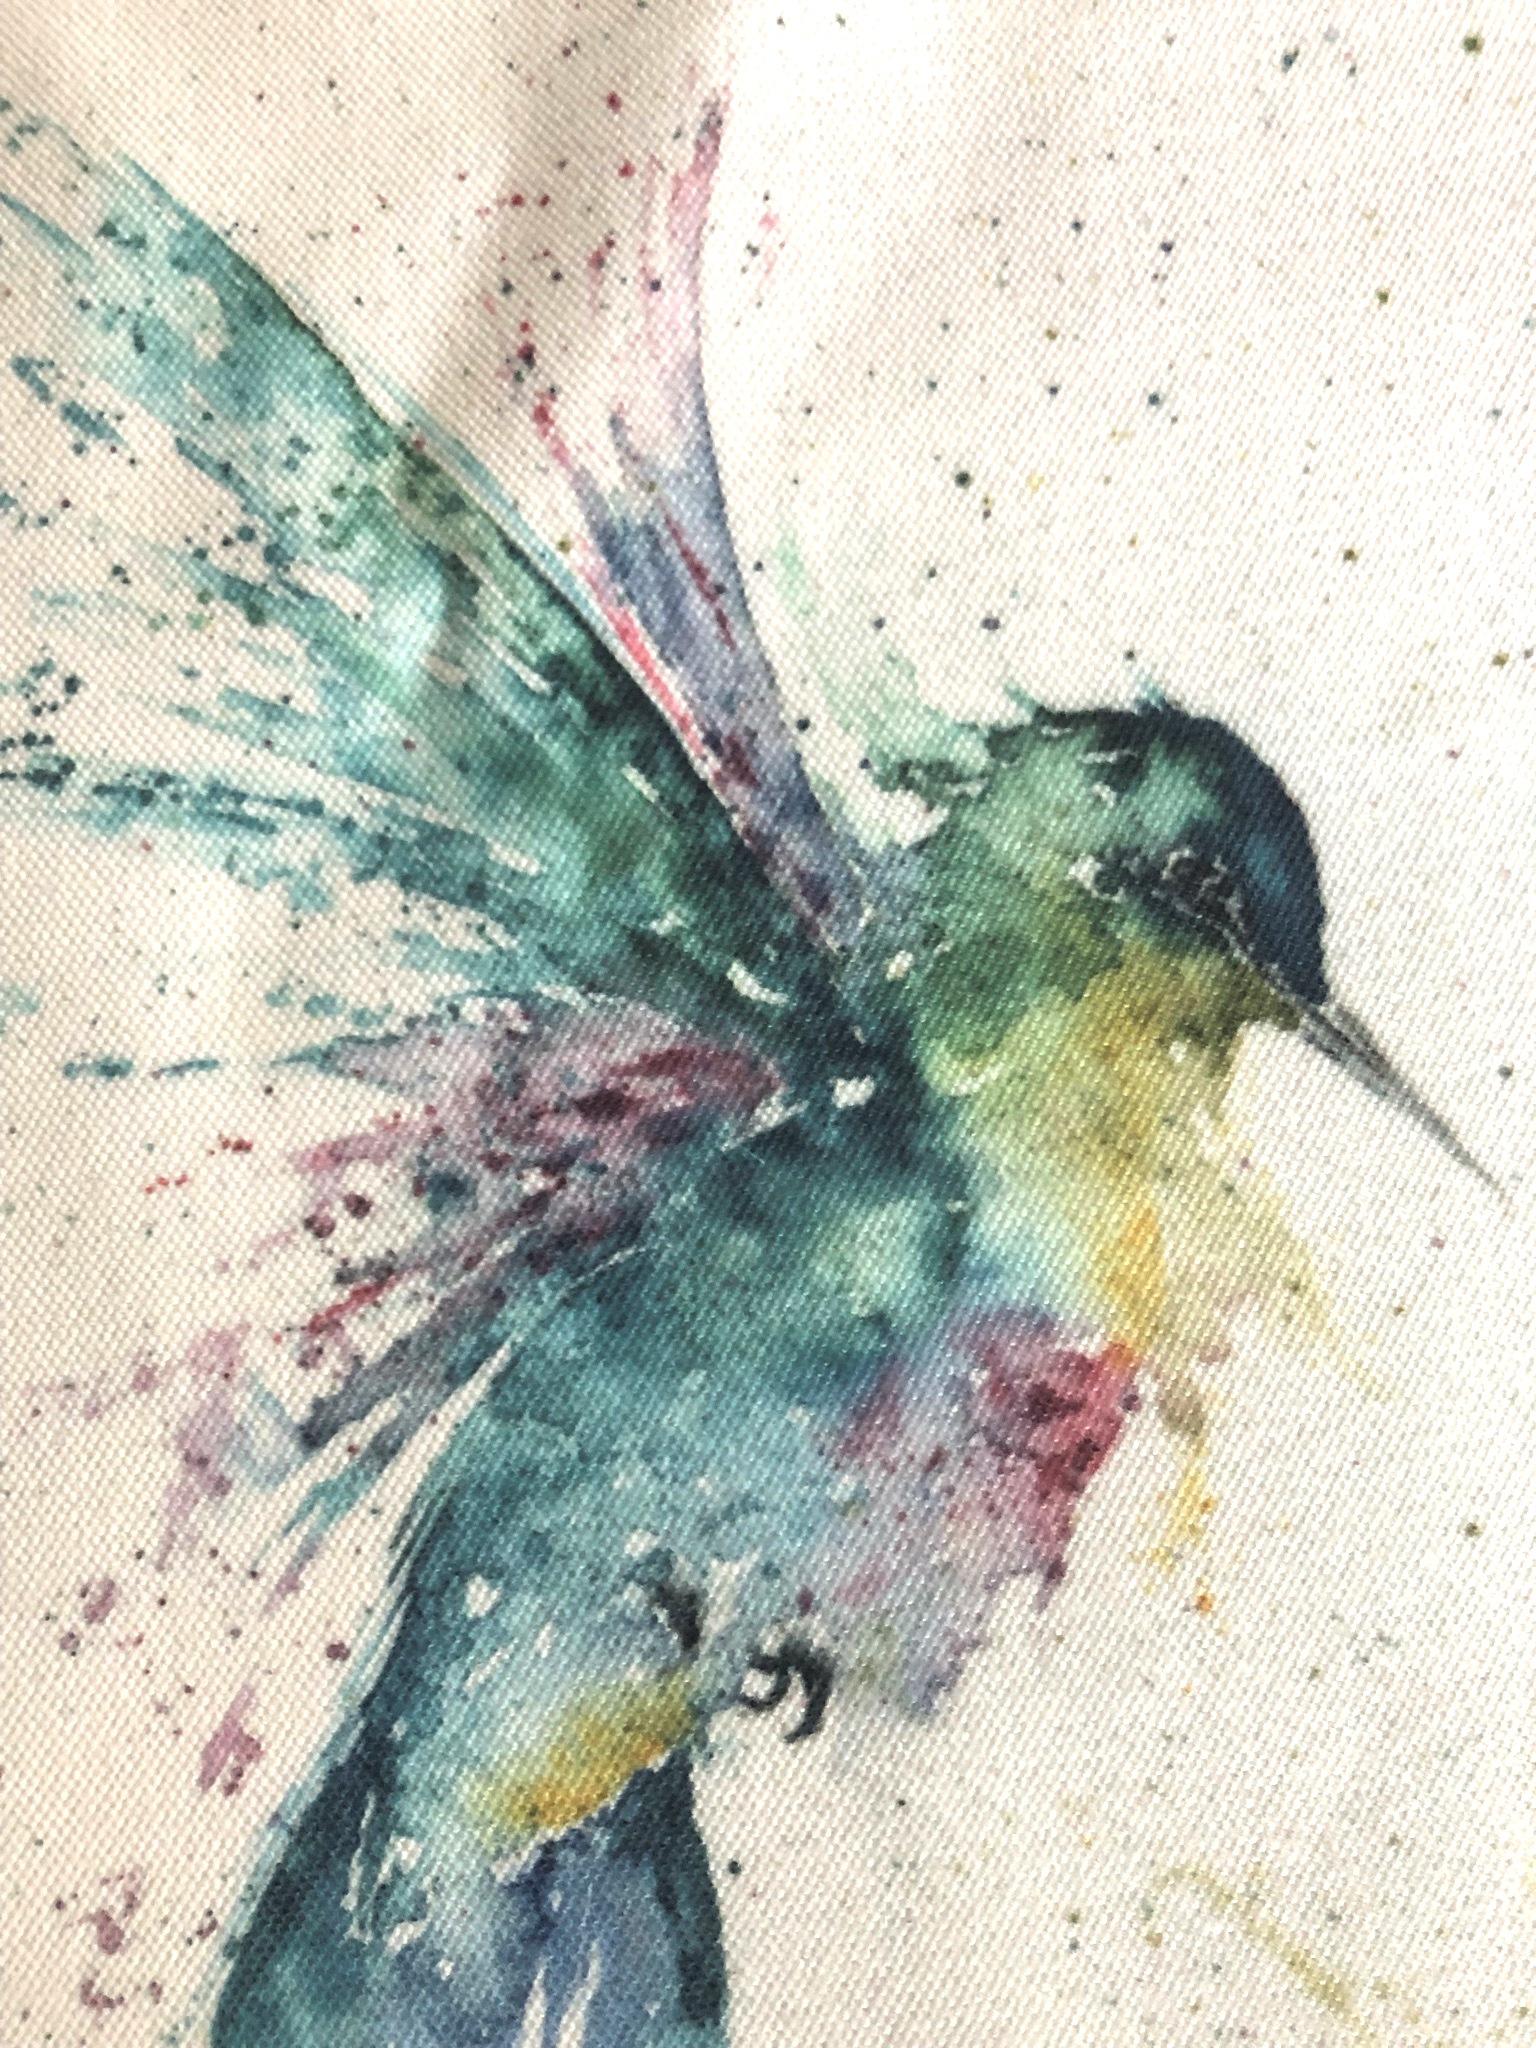 bird detail